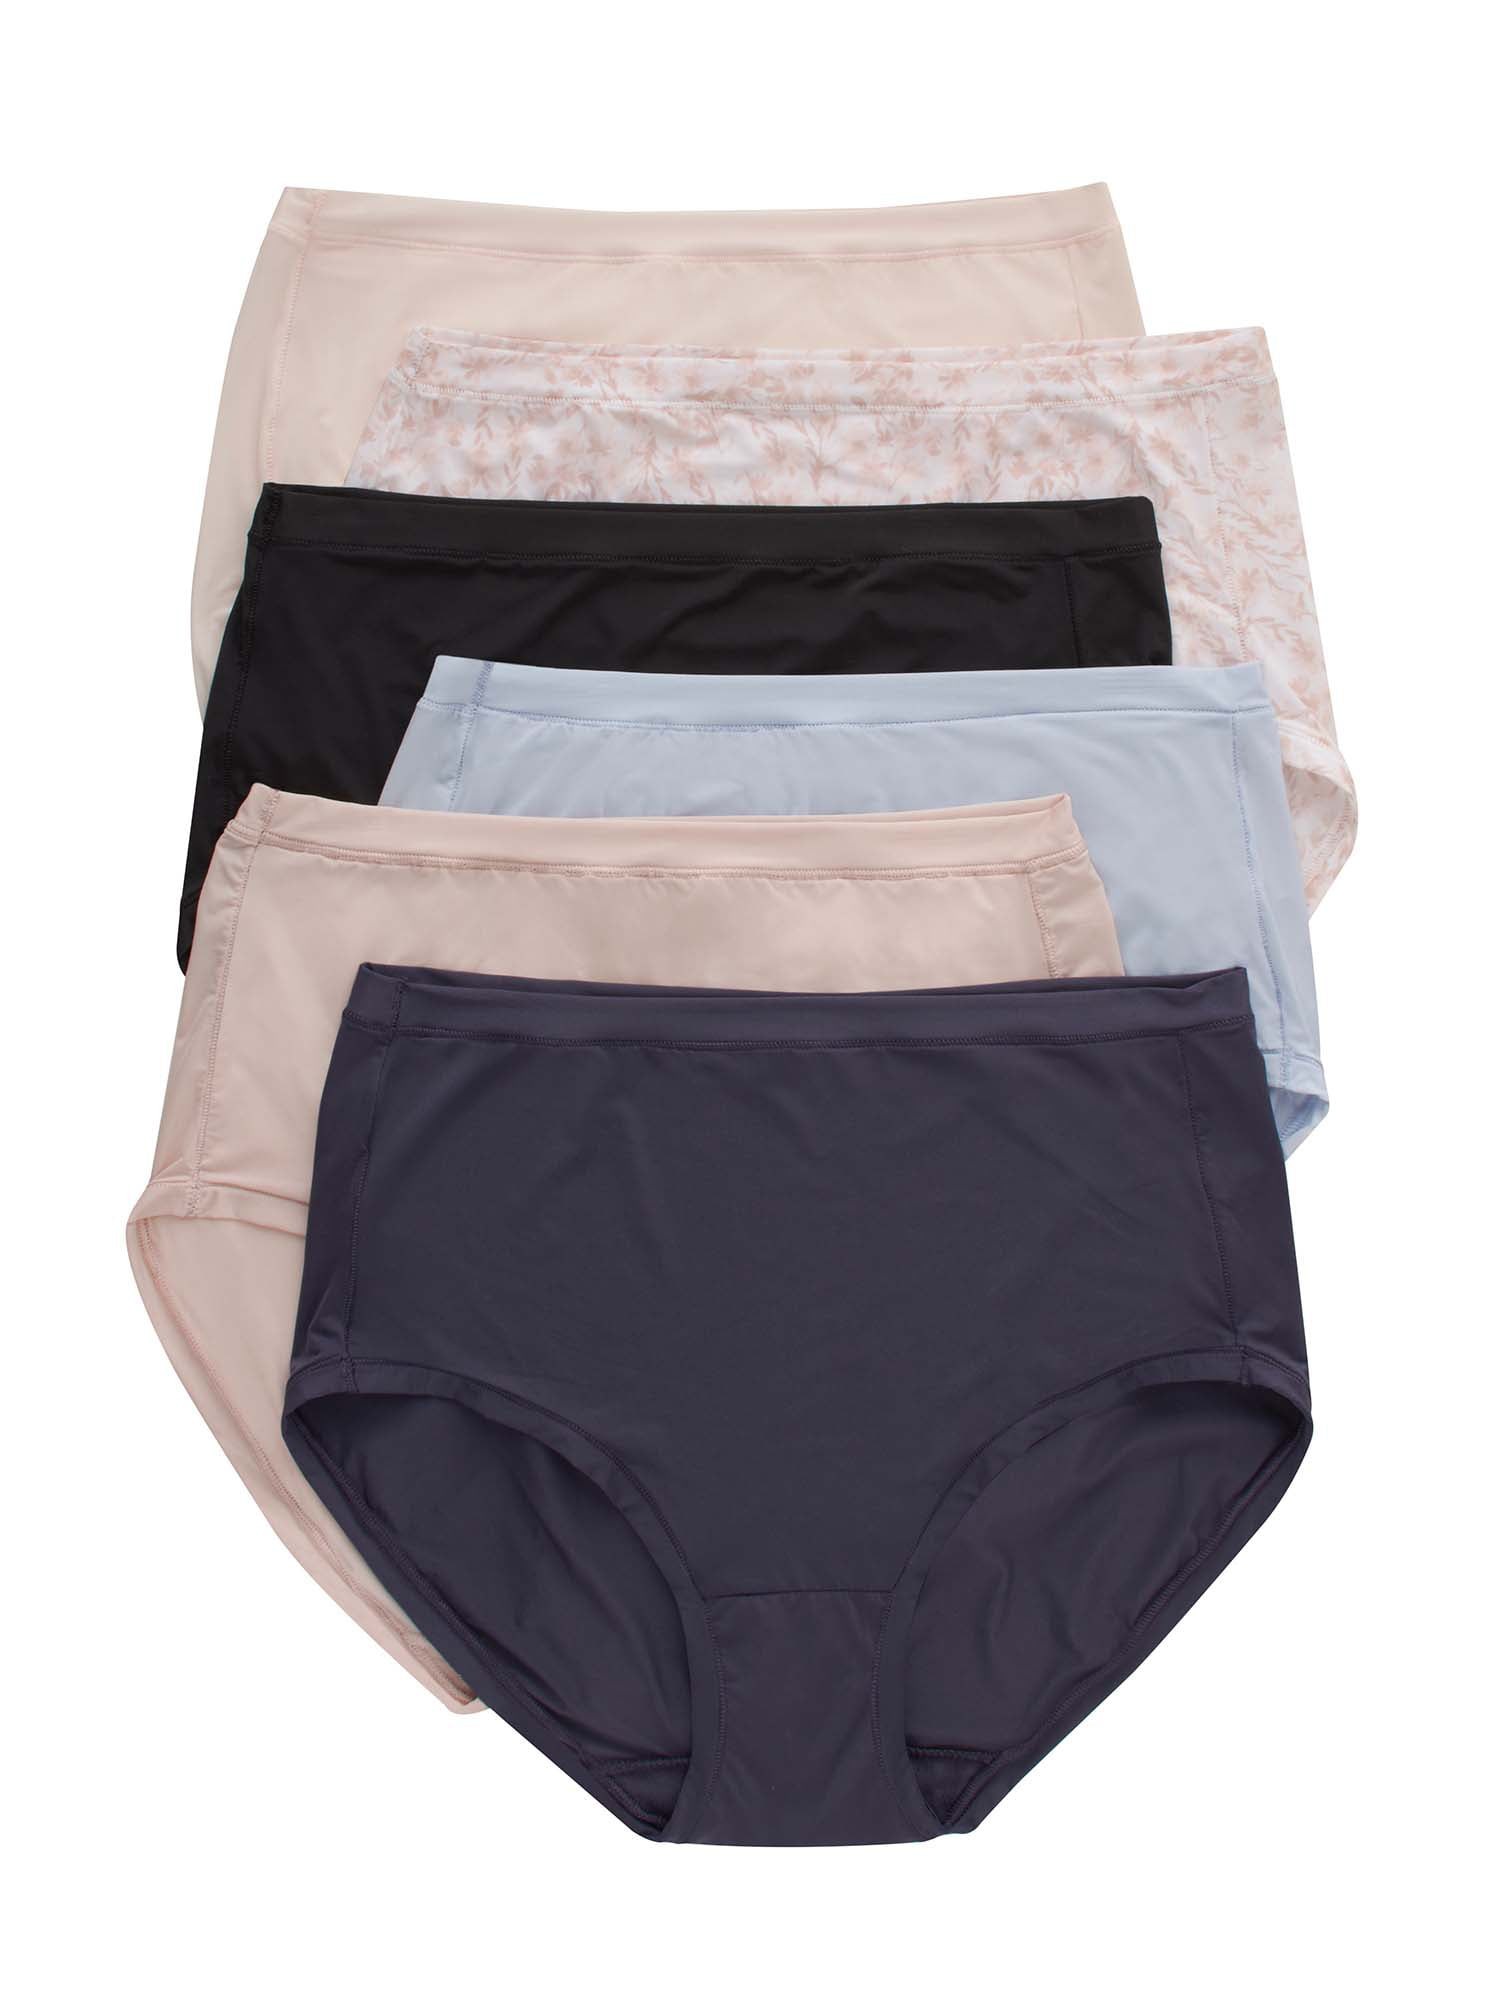 Hanes Women's Comfort Flex Fit Stretch Microfiber Modern Brief Underwear,  6-Pack Best Deals and Price History at